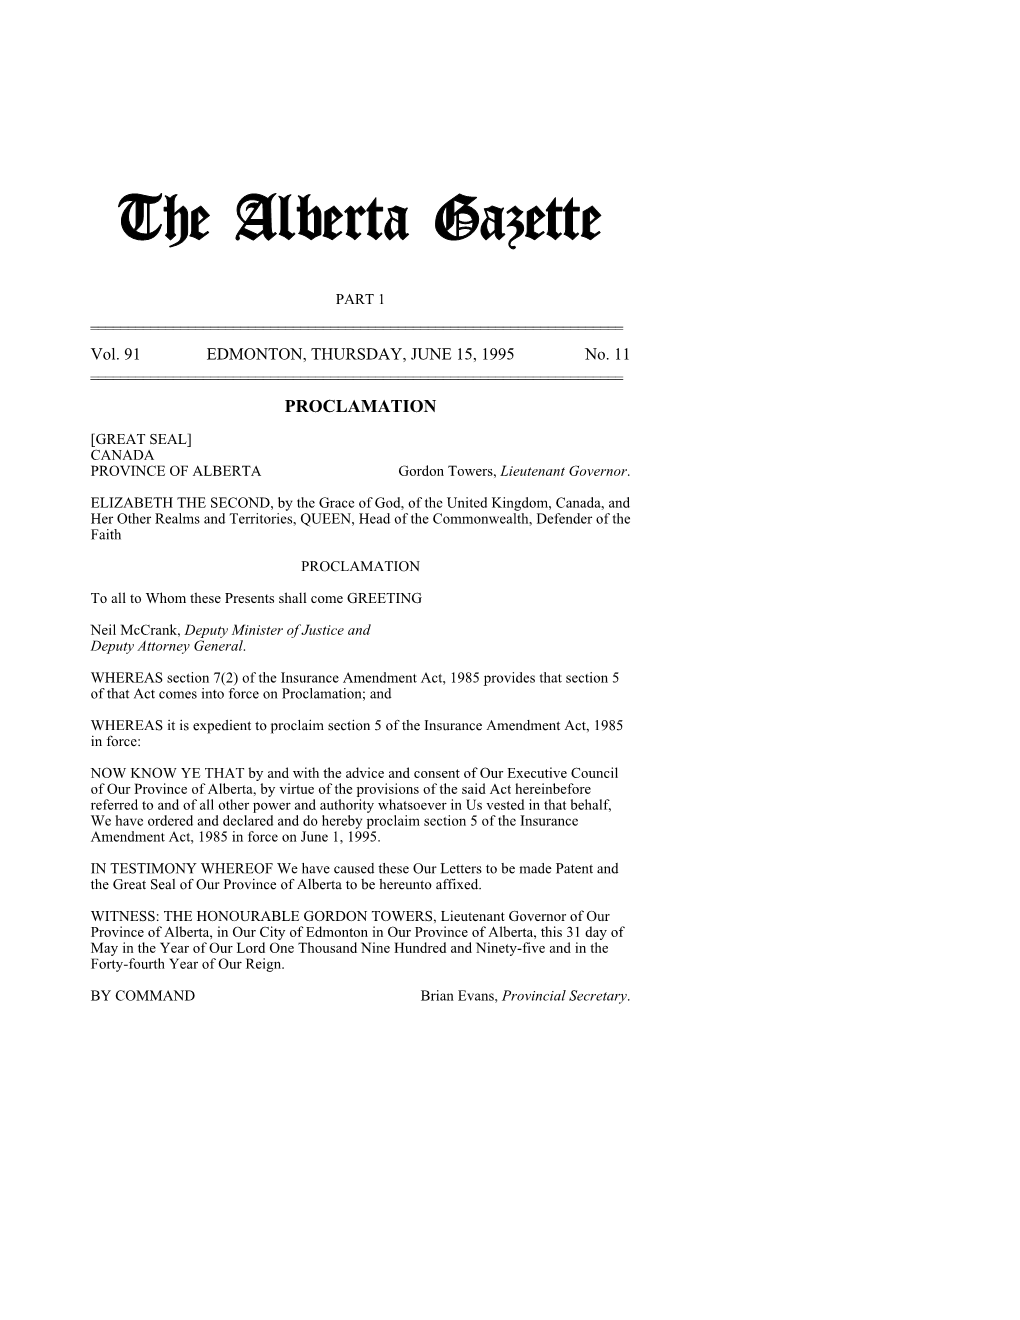 The Alberta Gazette, Part I, June 15, 1995